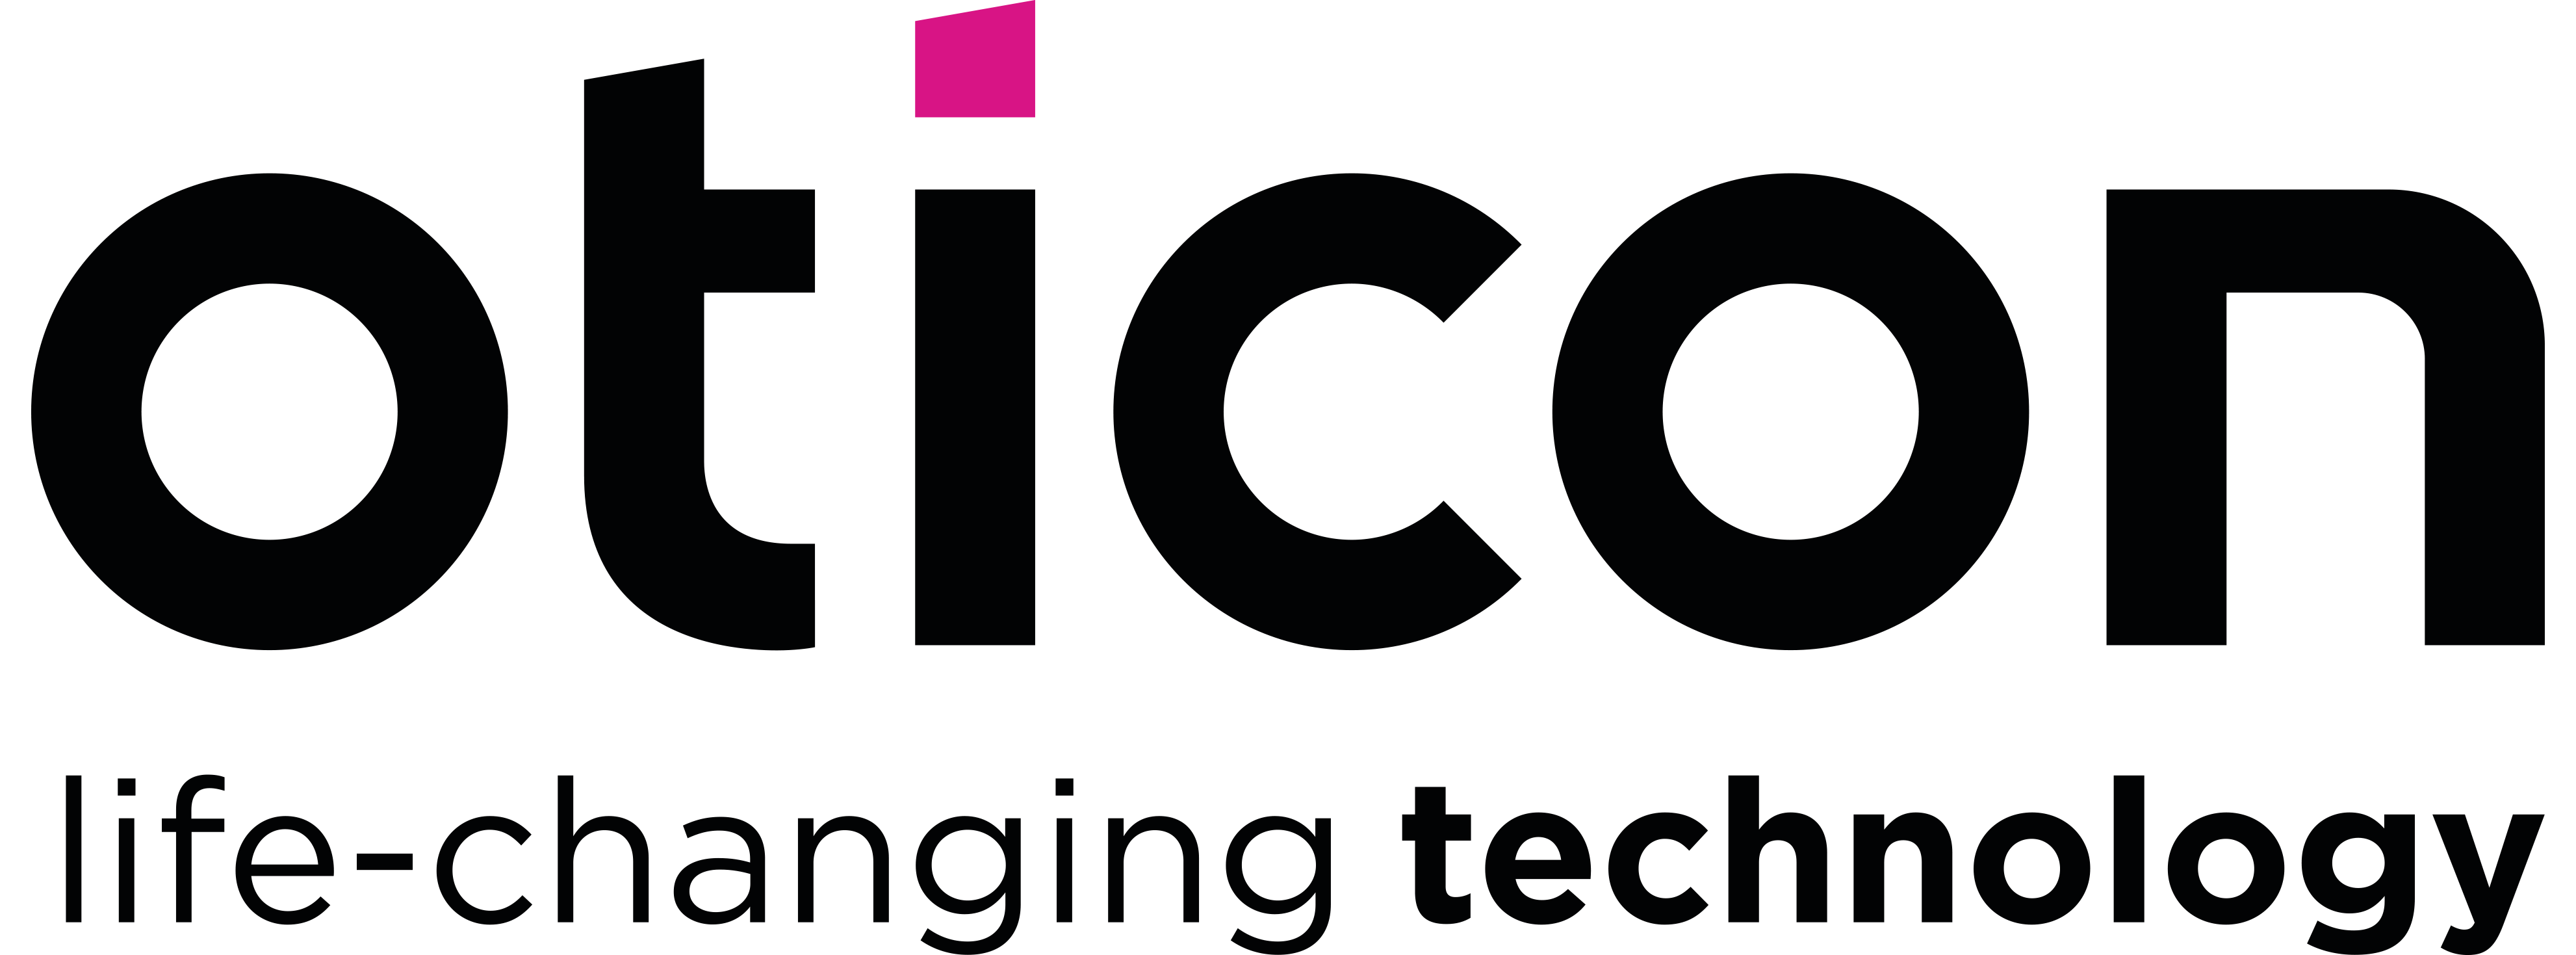 oticon logo positive transparent background